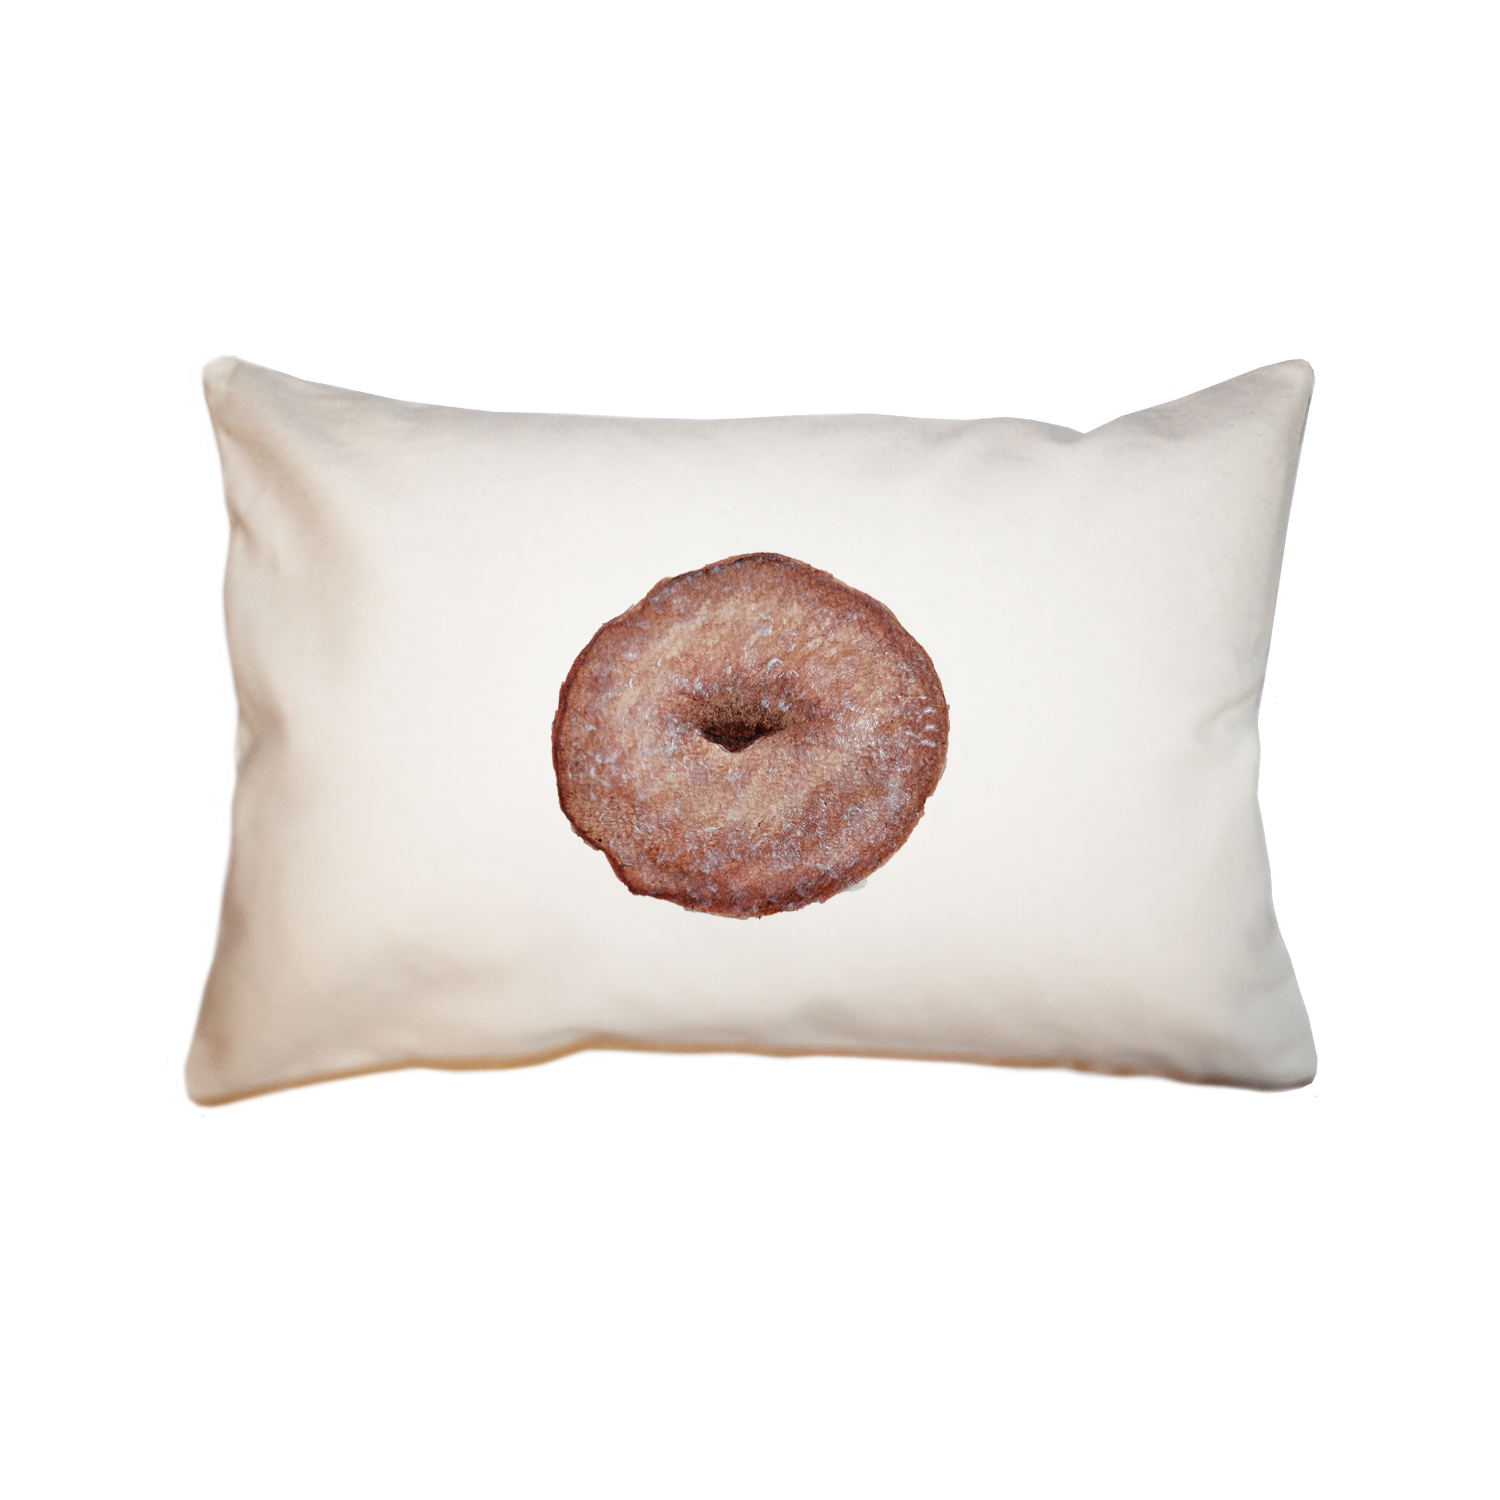 cider donut large rectangle pillow